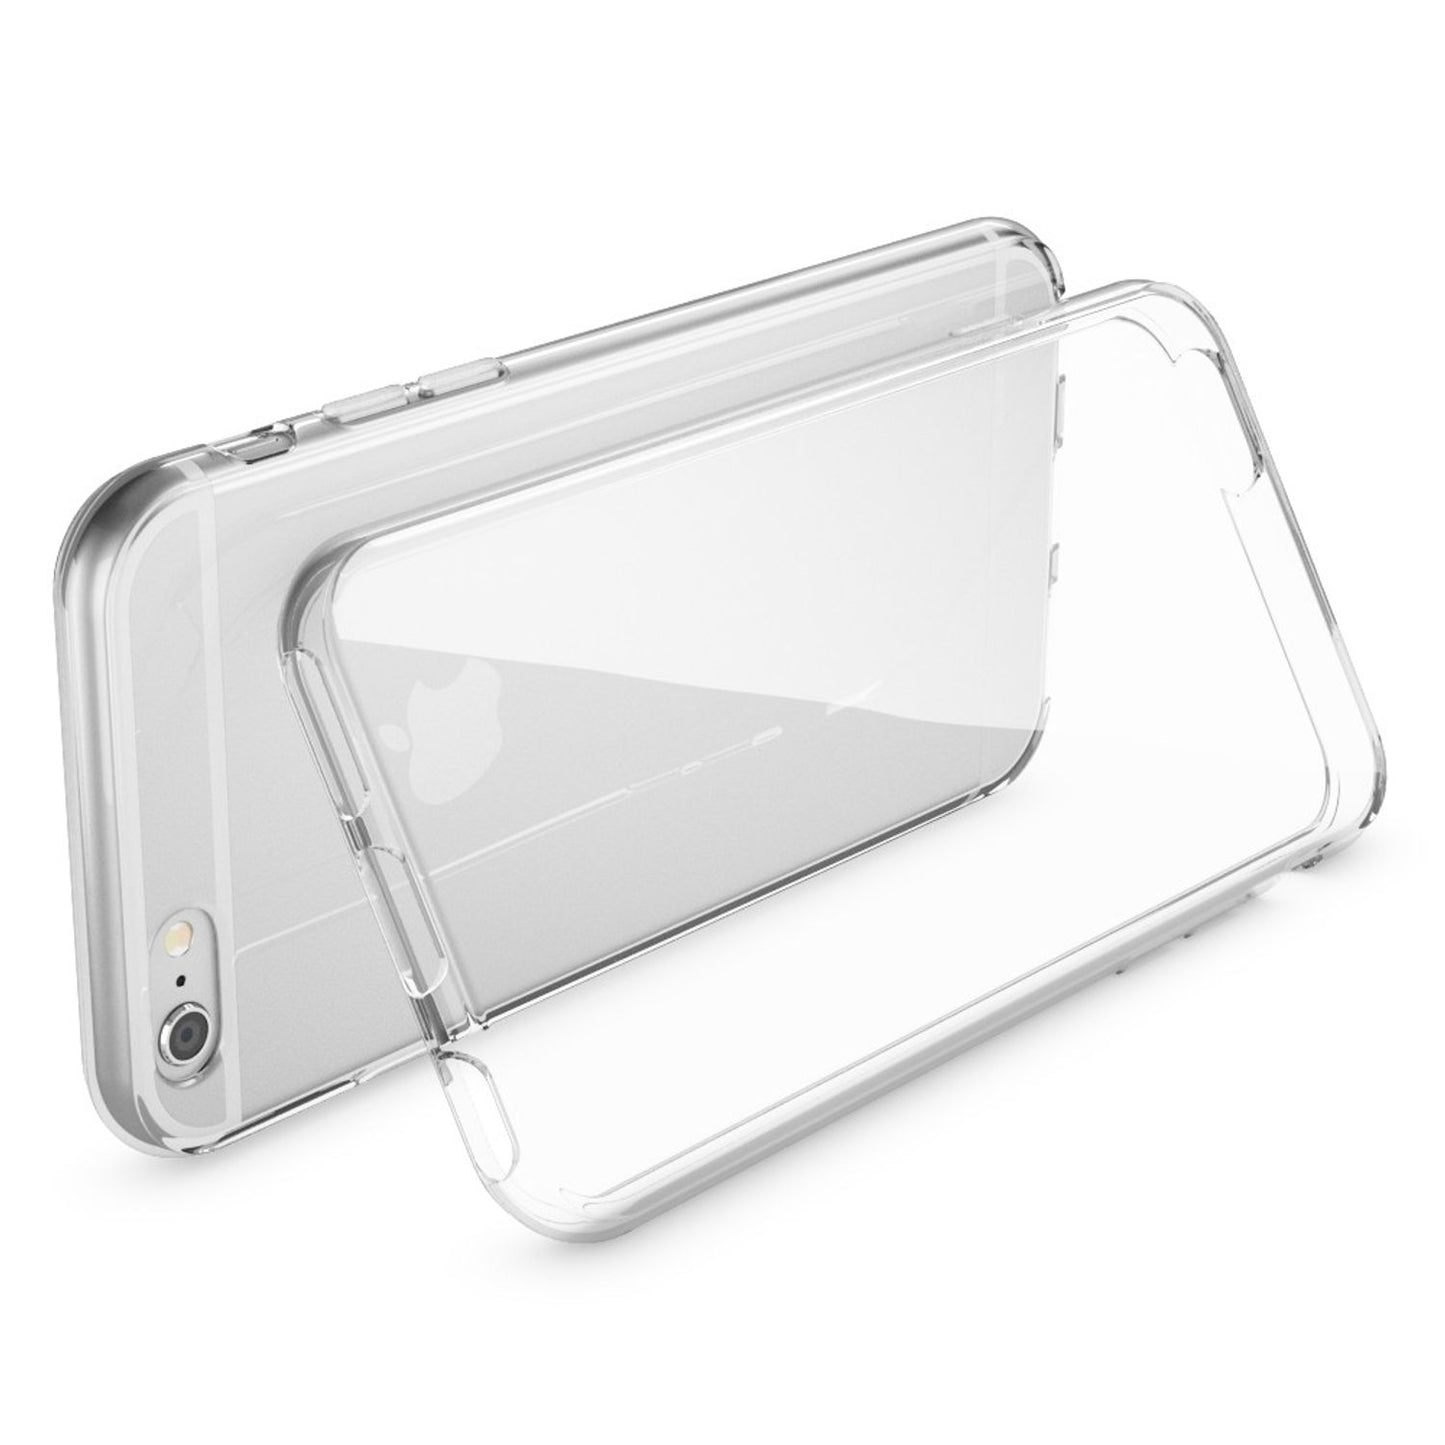 Apple iPhone 6 6S Hülle von NALIA, Case Cover Transparent Schutzhülle Handyhülle